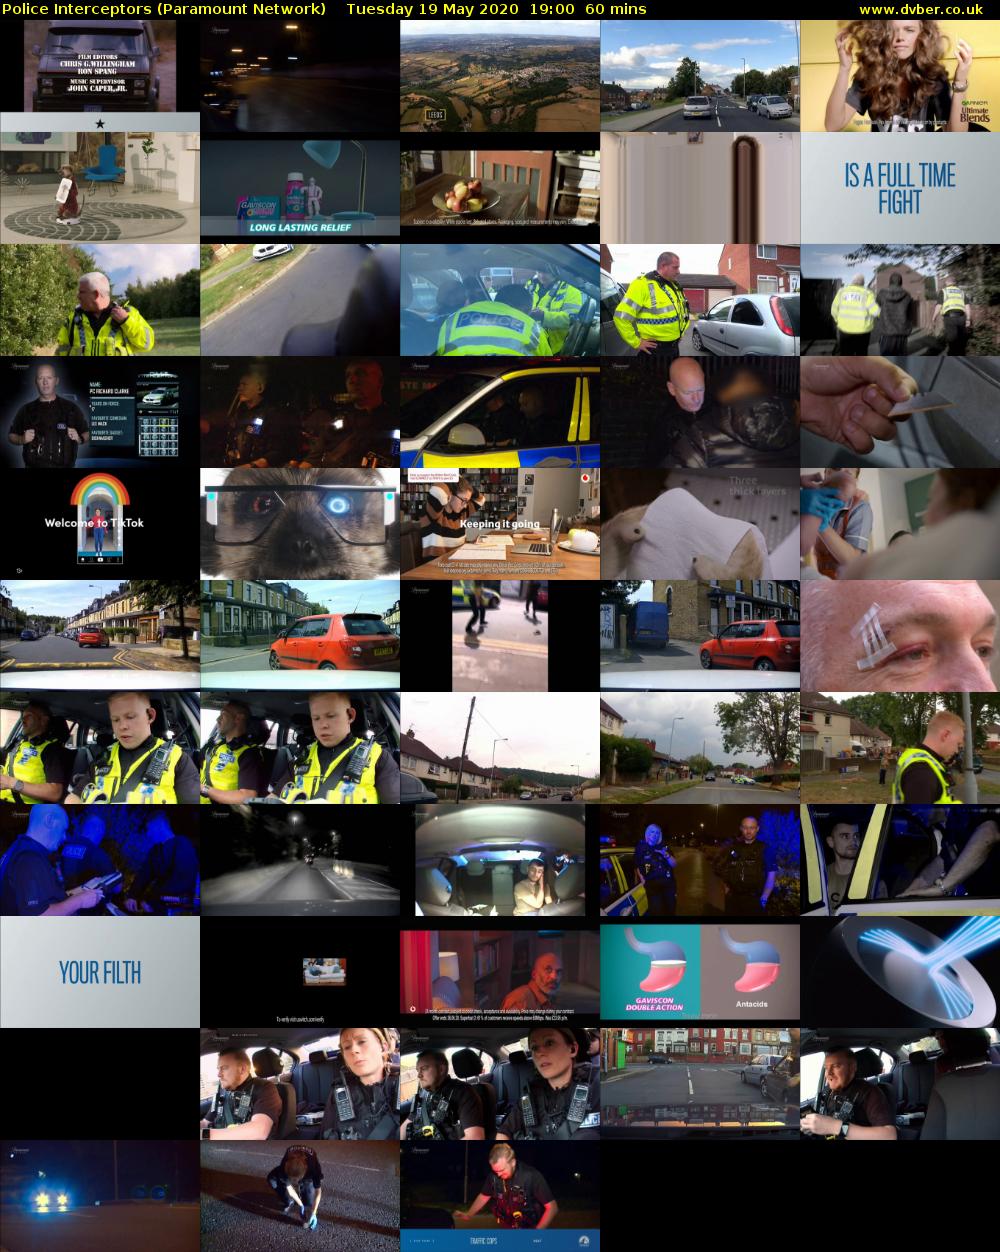 Police Interceptors (Paramount Network) Tuesday 19 May 2020 19:00 - 20:00